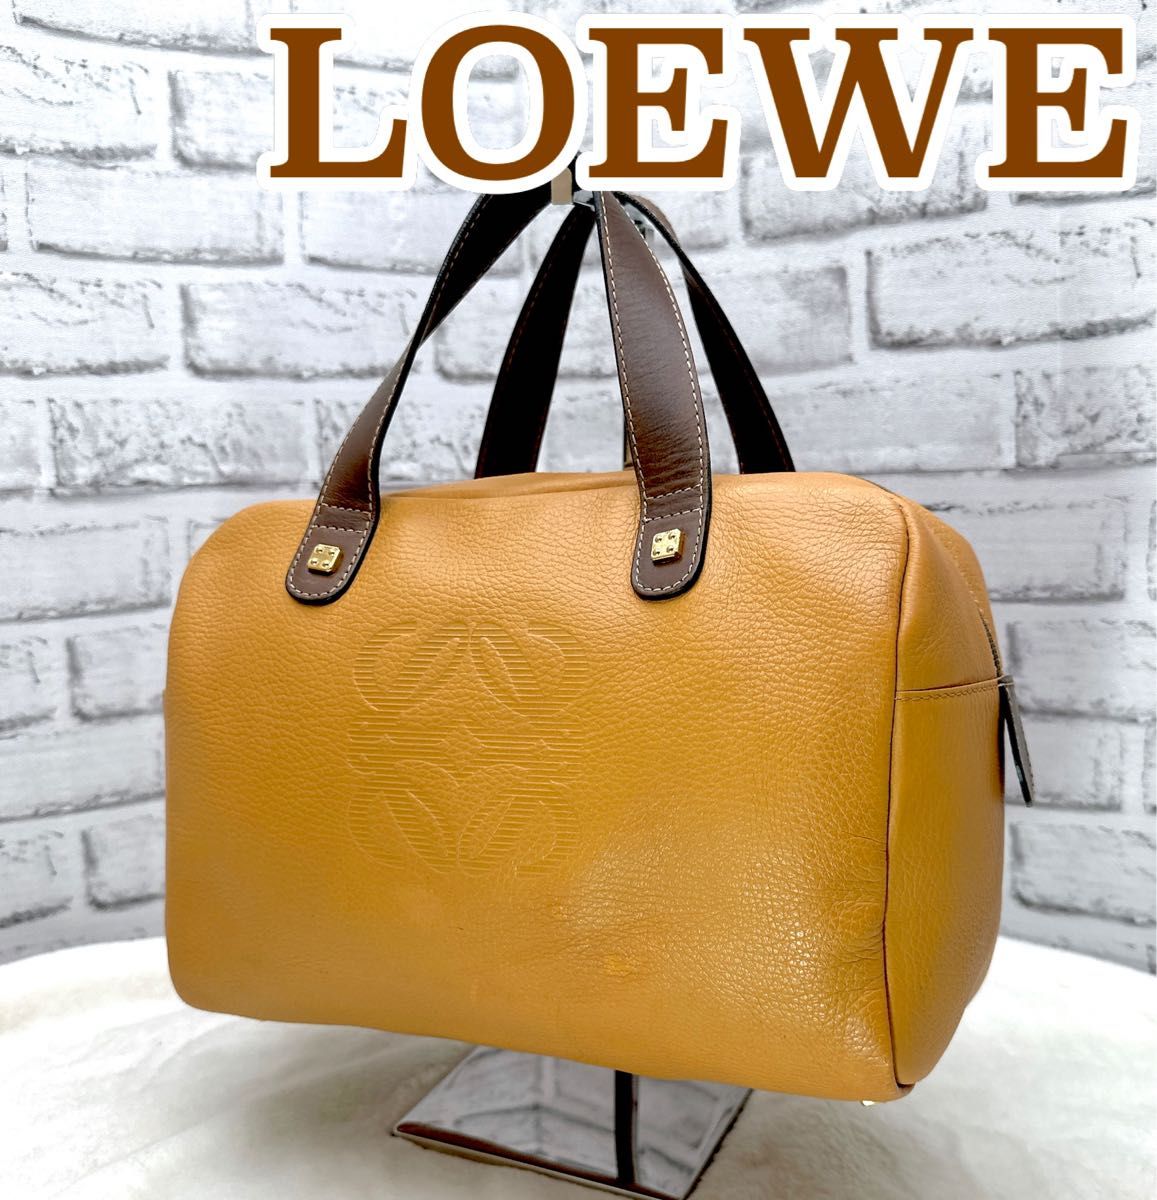 LOEWE ロエベ アナグラム ロゴ ボストン レザー キャメル ゴールド金具 ミニボストン ハンドバッグ